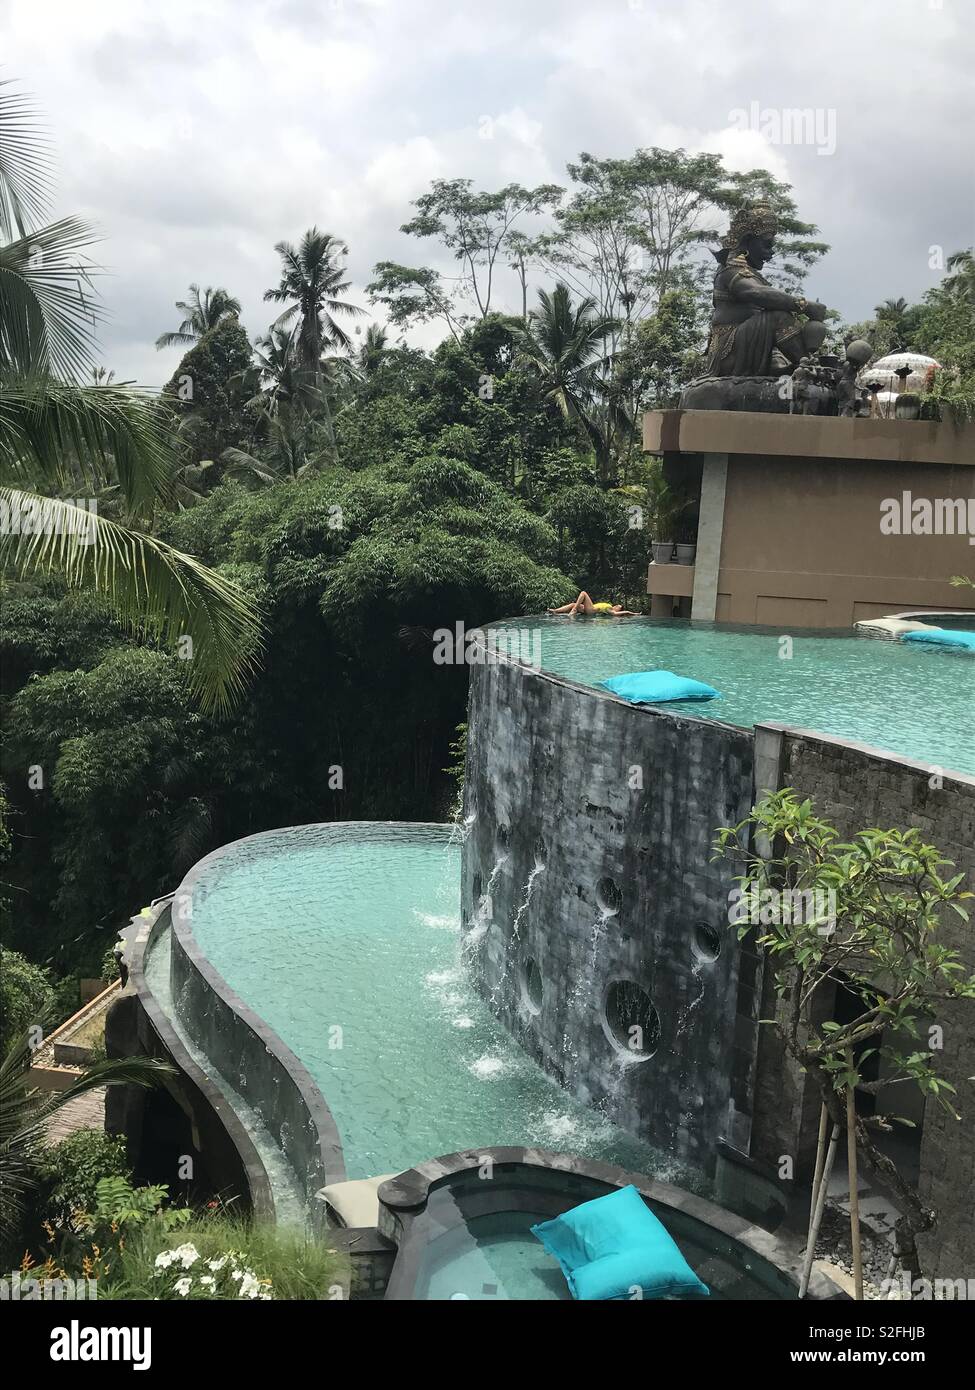 Girl baby Bali pool vocation relex trip sun bikini palm natural perfect perfection green hotel resort view chill Stock Photo